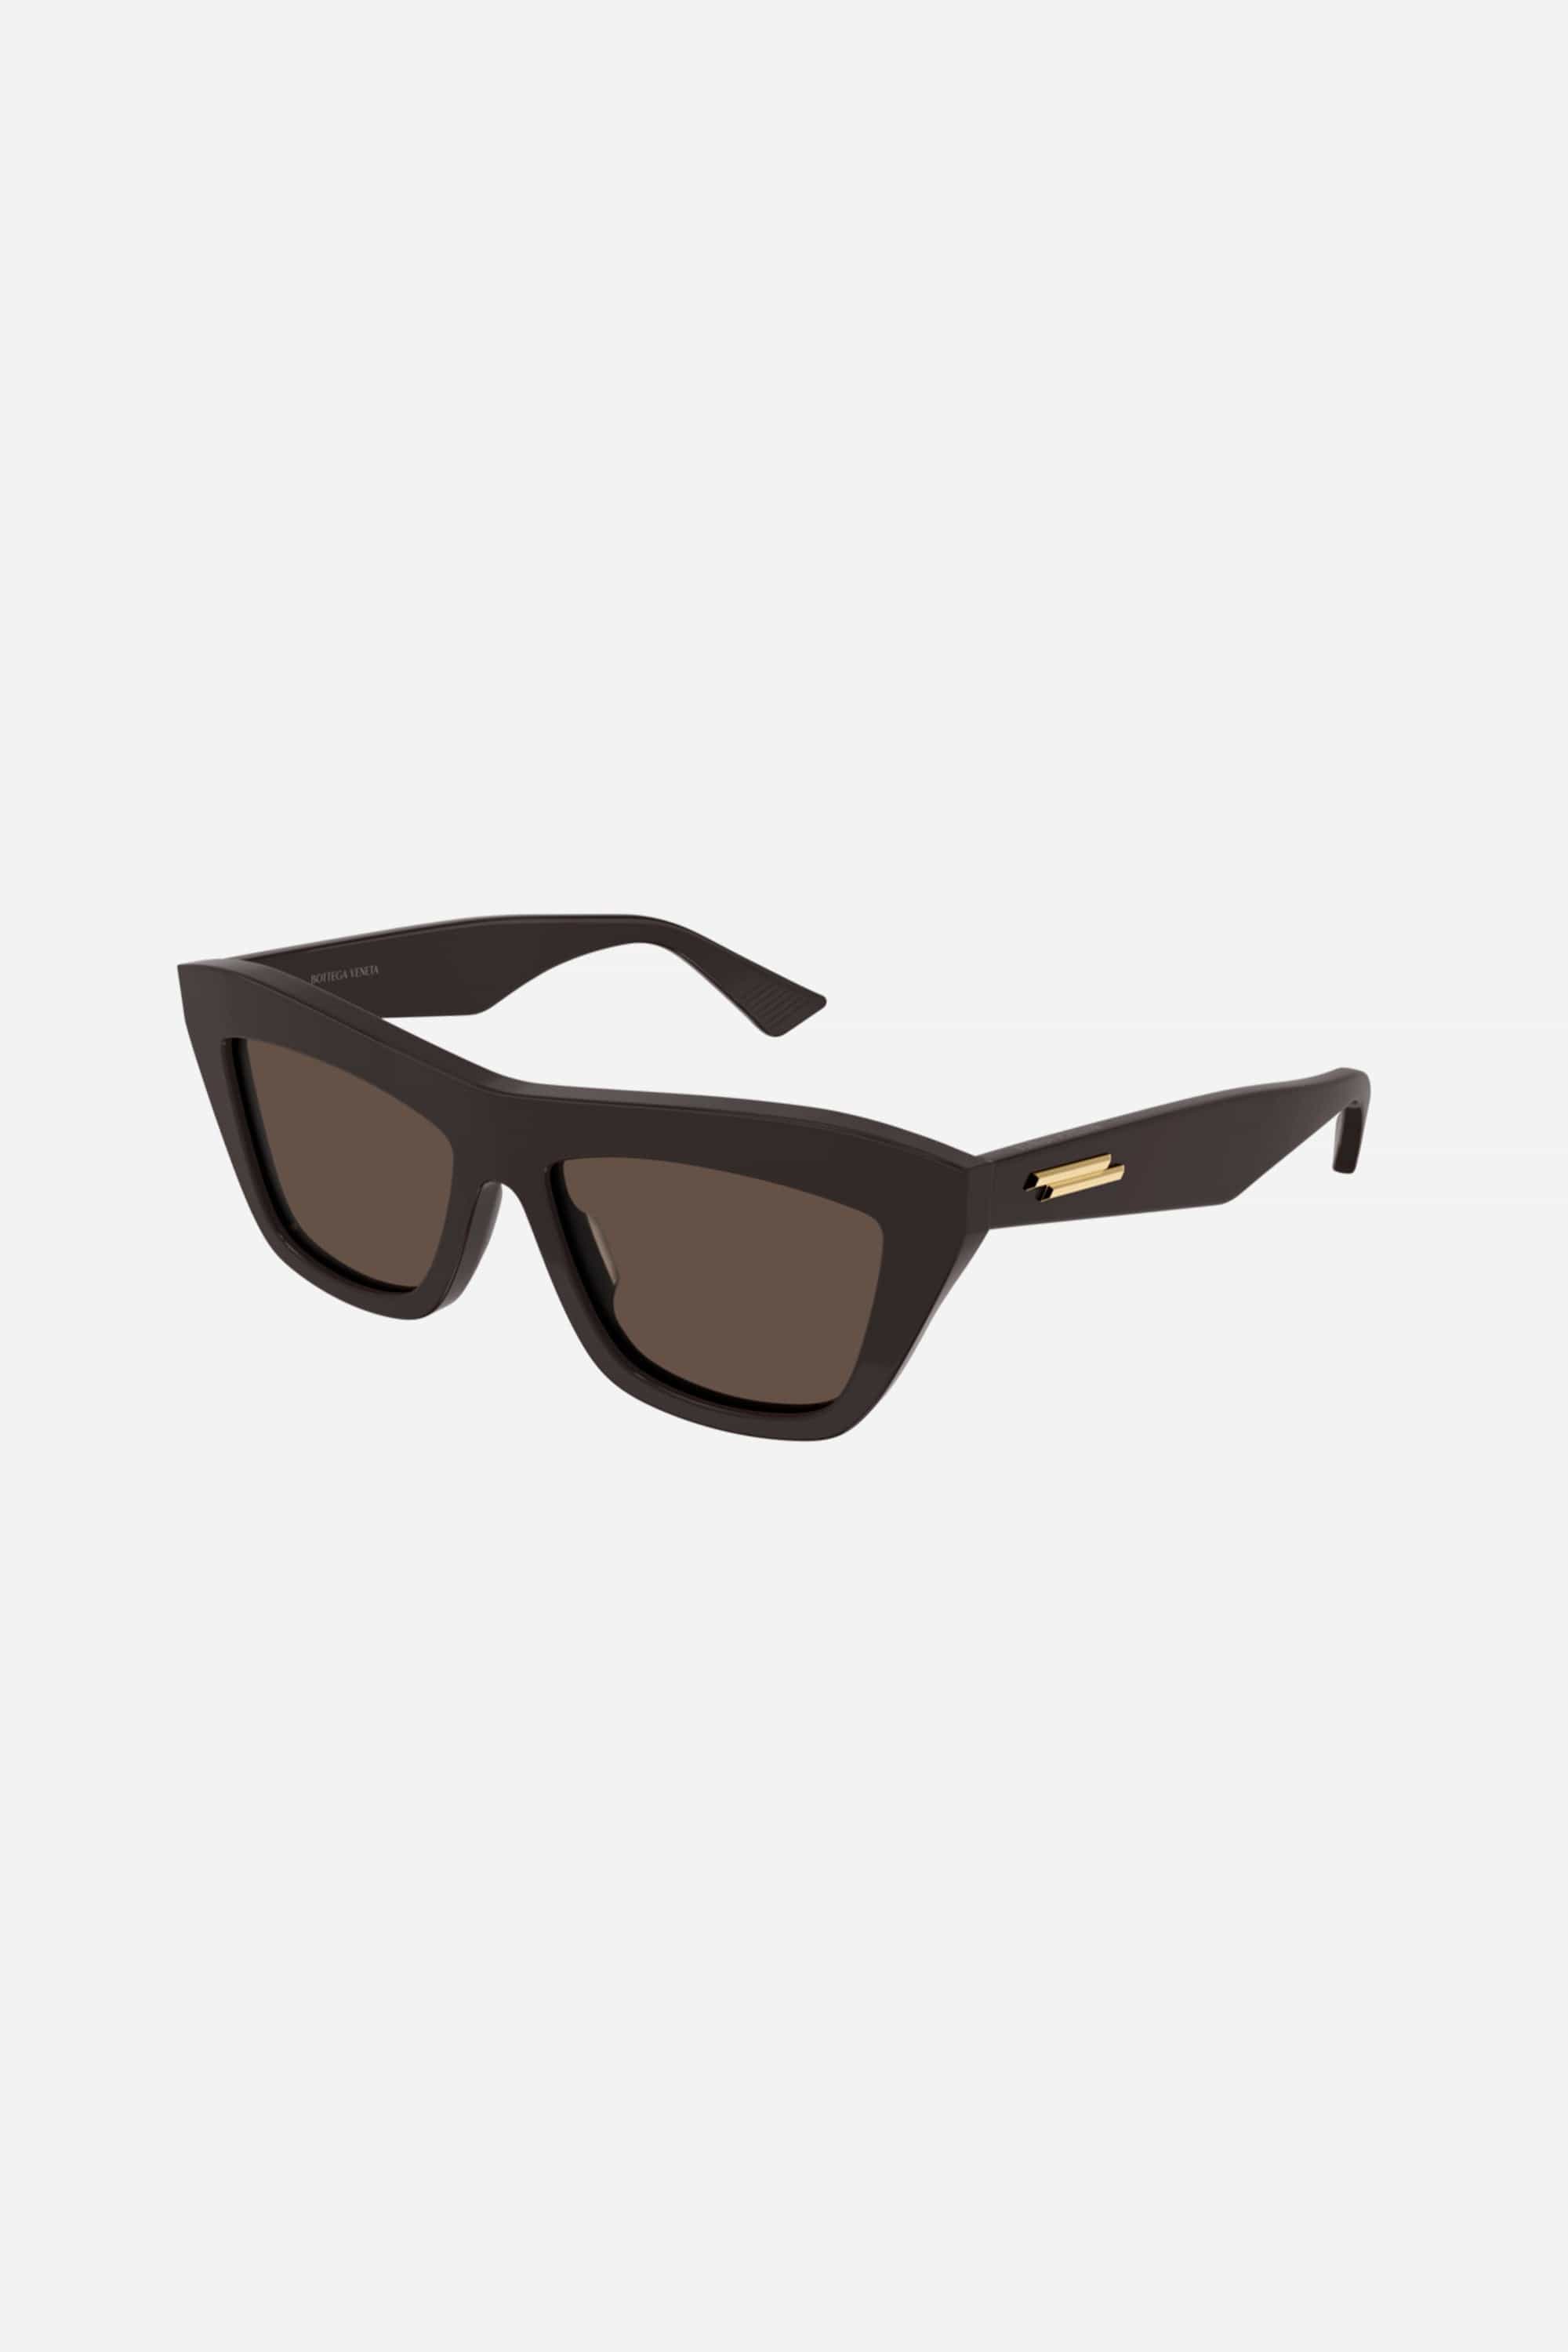 Bottega Veneta squared cat eye chocolate sunglasses - Eyewear Club